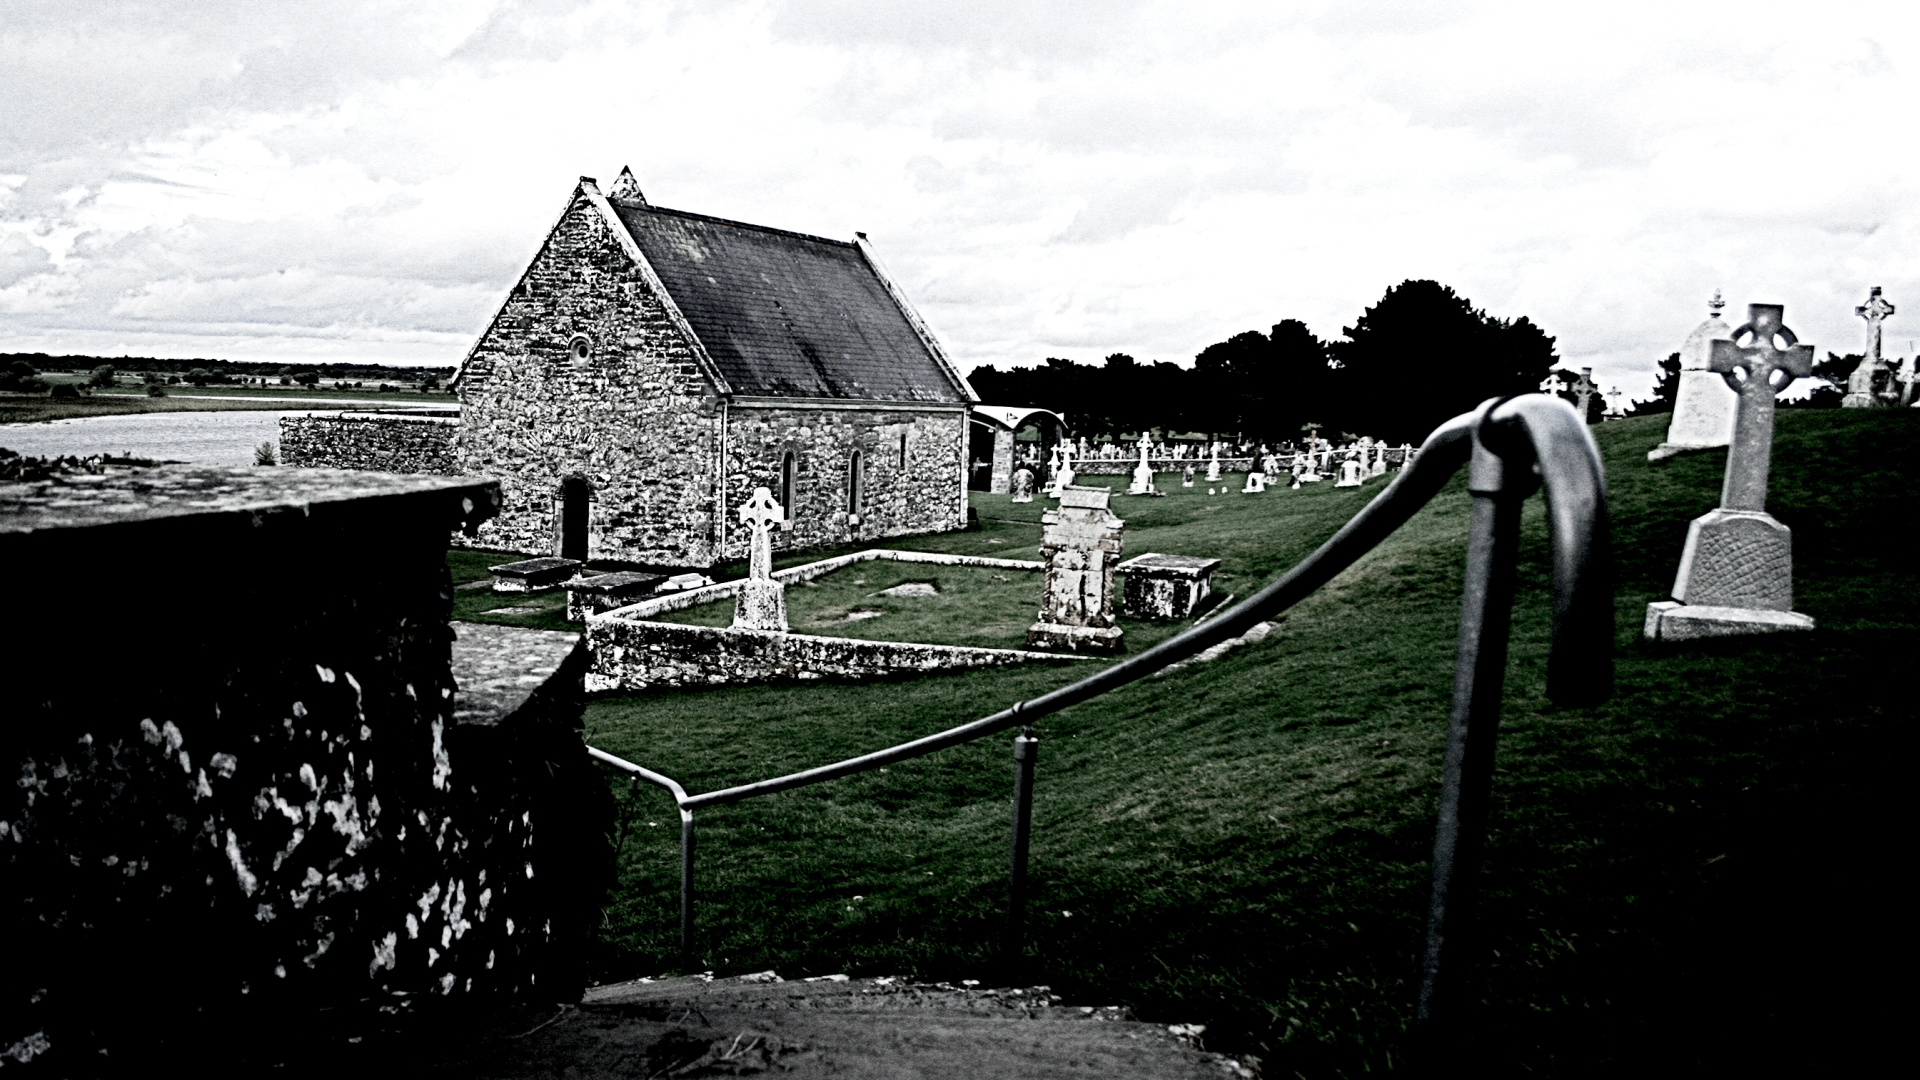 Architecture Cemetery Clonmacnoise Cross Ireland Monastery 1920x1080